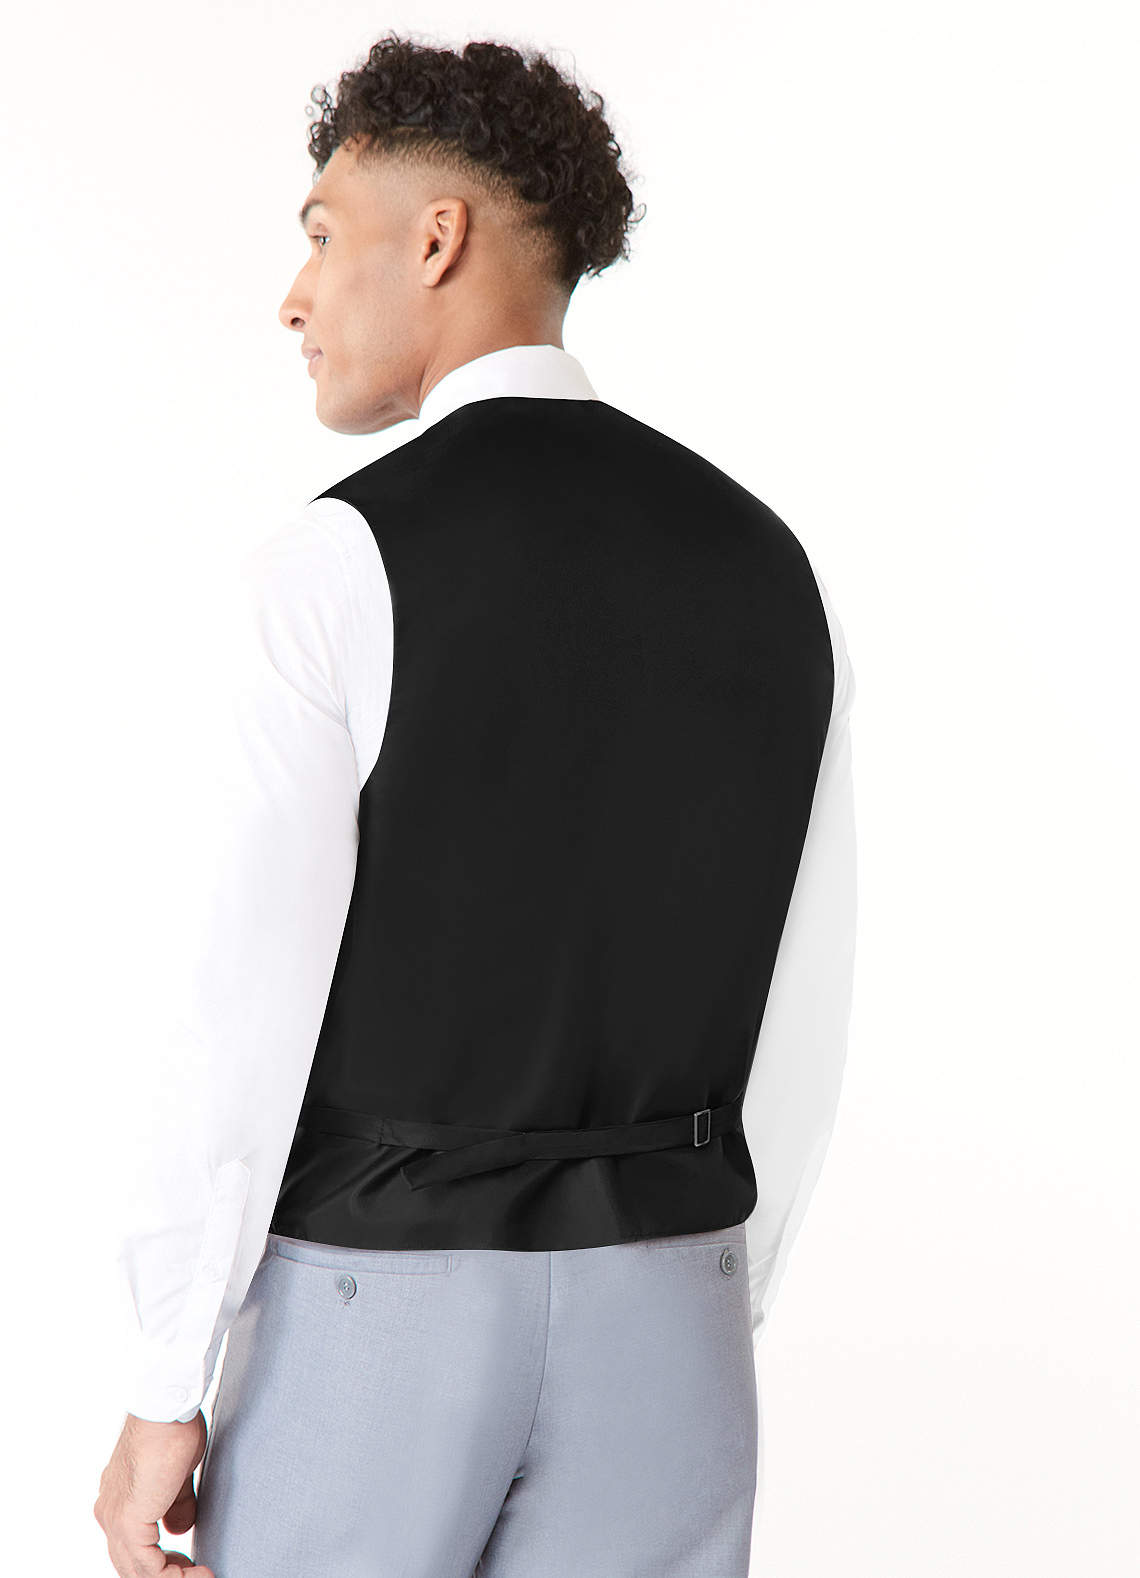 front Gentlemen's Collection Matte Satin Vest